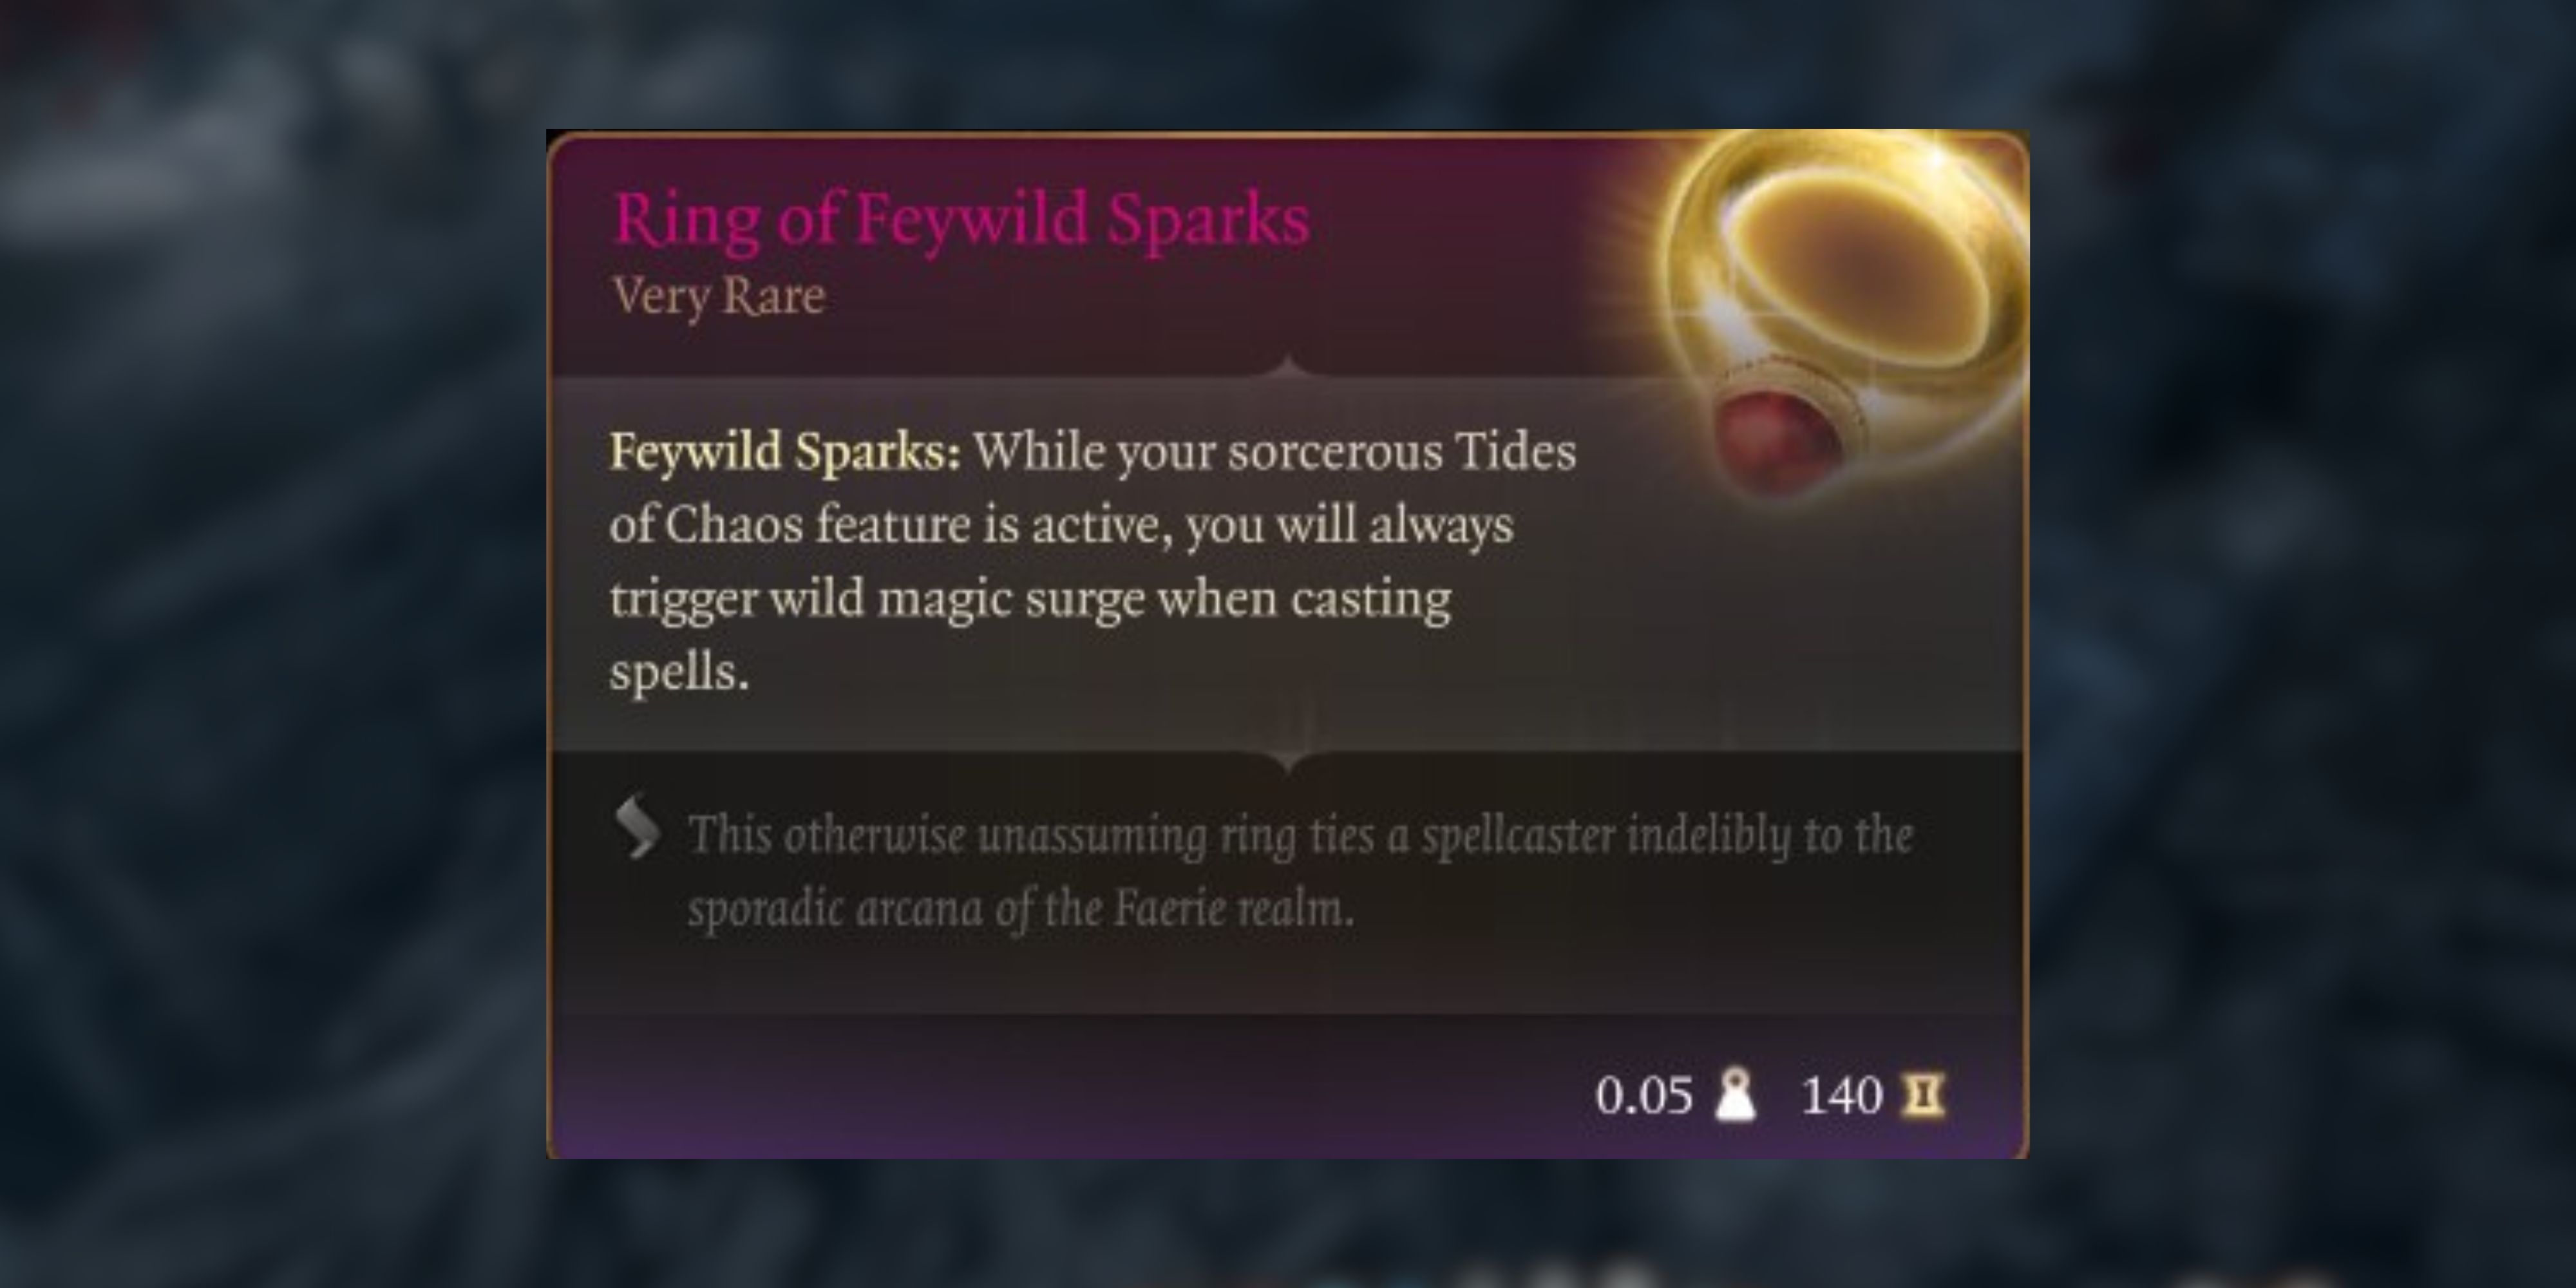 ring of feywild sparks in baldur's gate 3